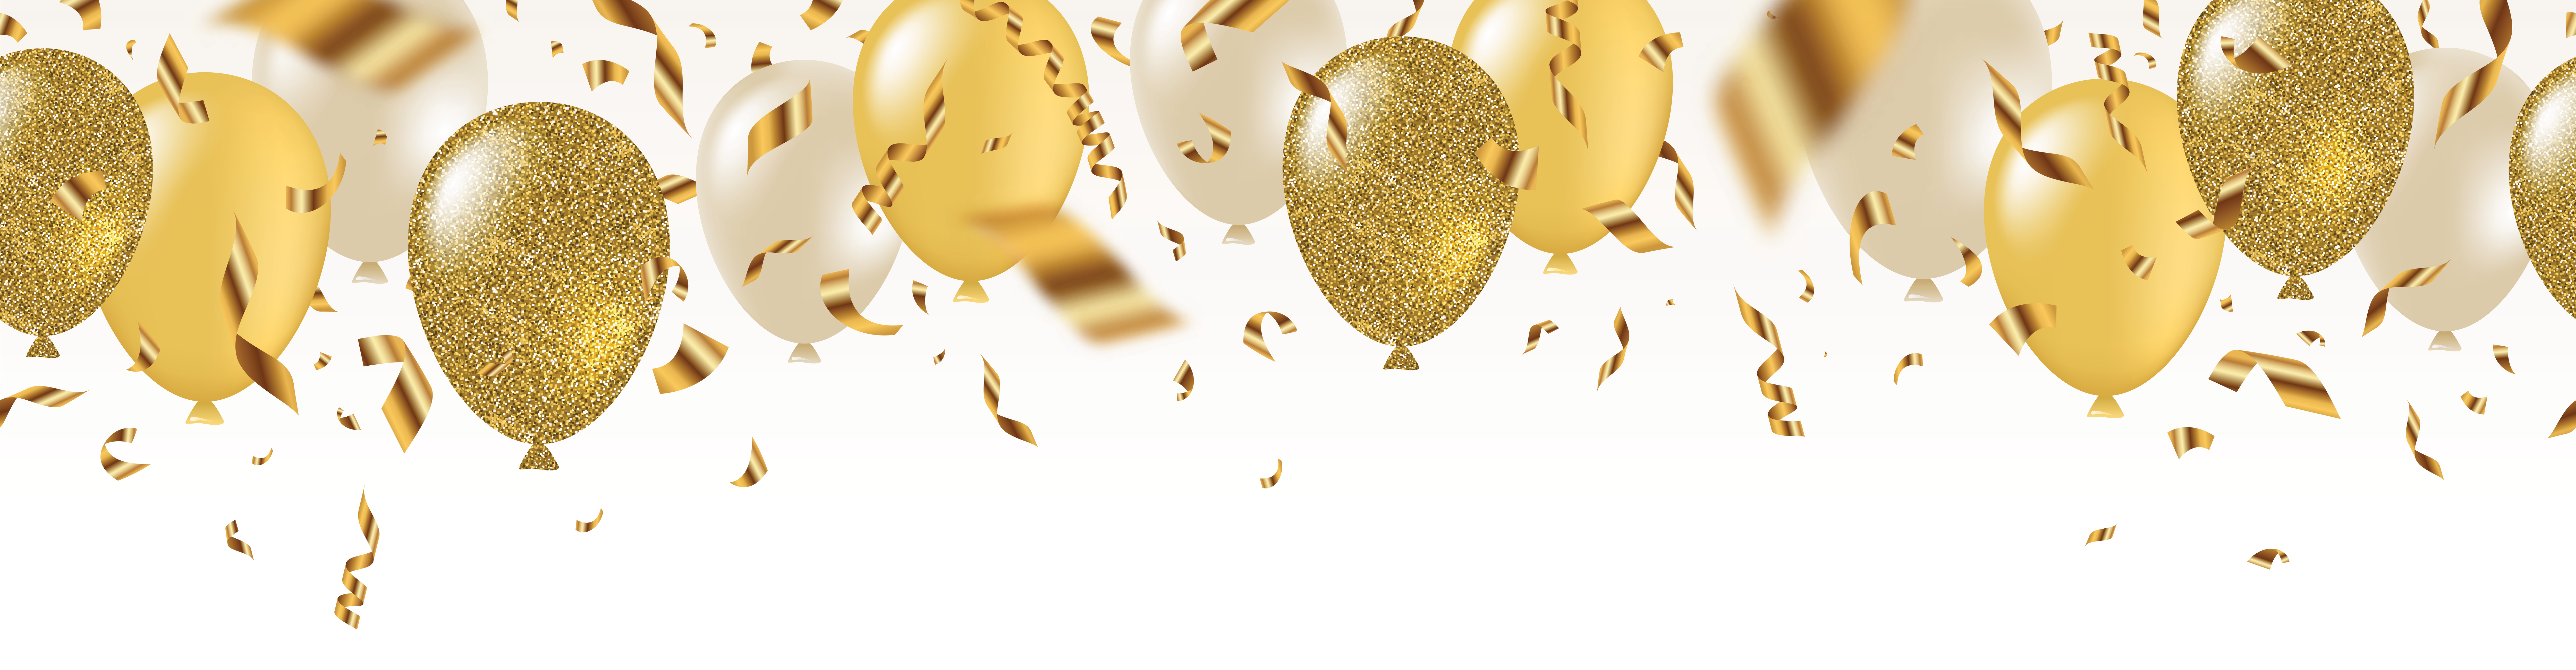 Celebratory seamless banner - white, yellow, glitter gold balloons and golden foil confetti